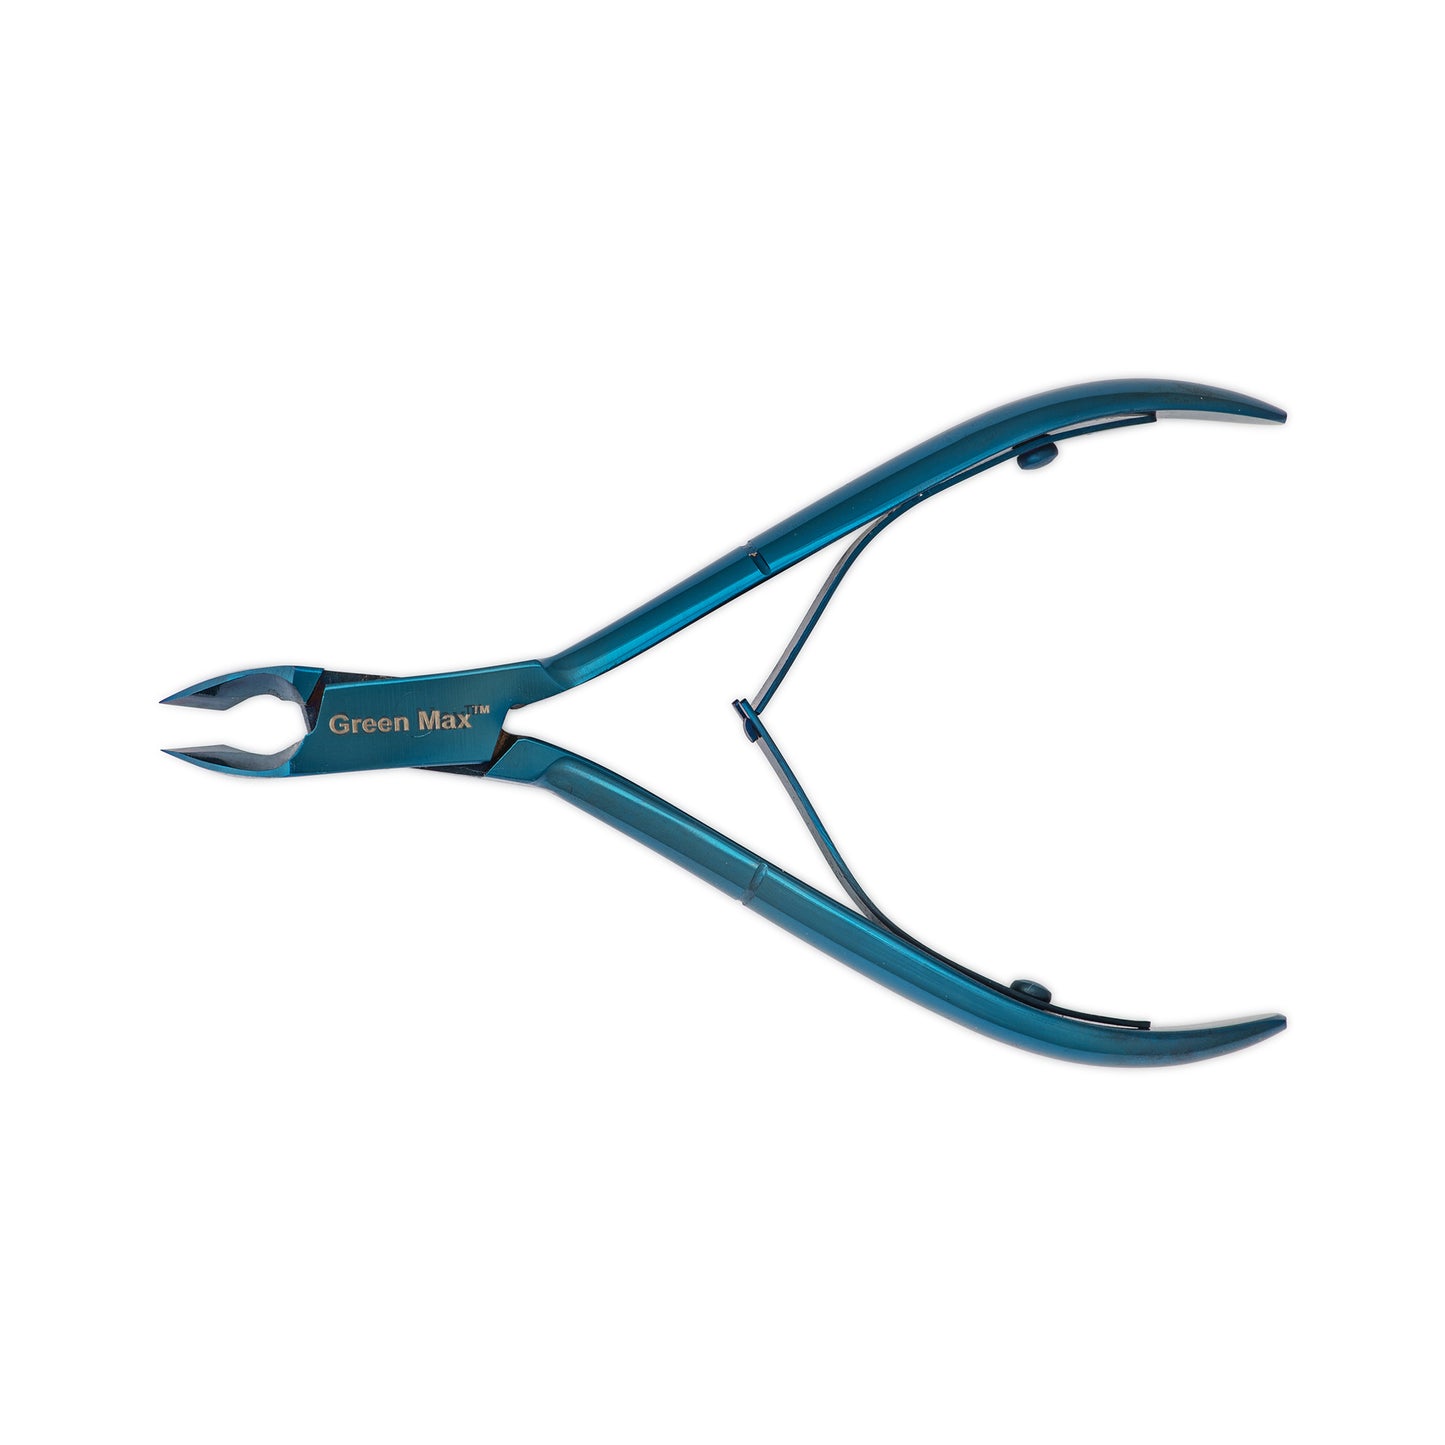 Cuticle Nipper, Pointed Blade, Cuticle Trimmer, Manicure | Pedicure Tool.(BLUE) 4"